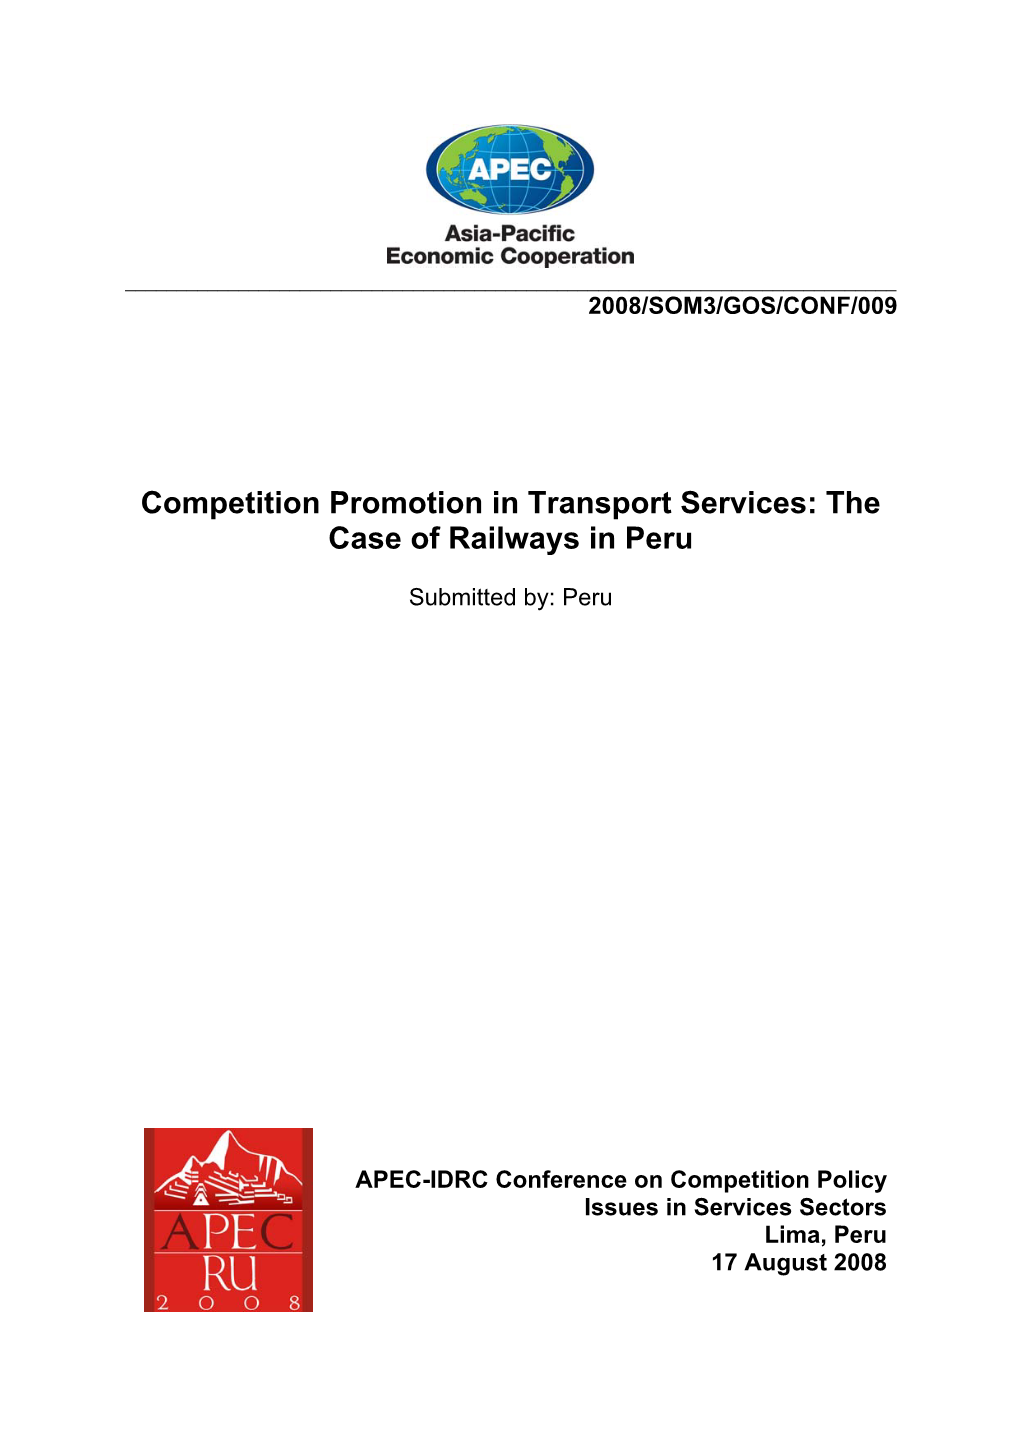 The Case of Railways in Peru